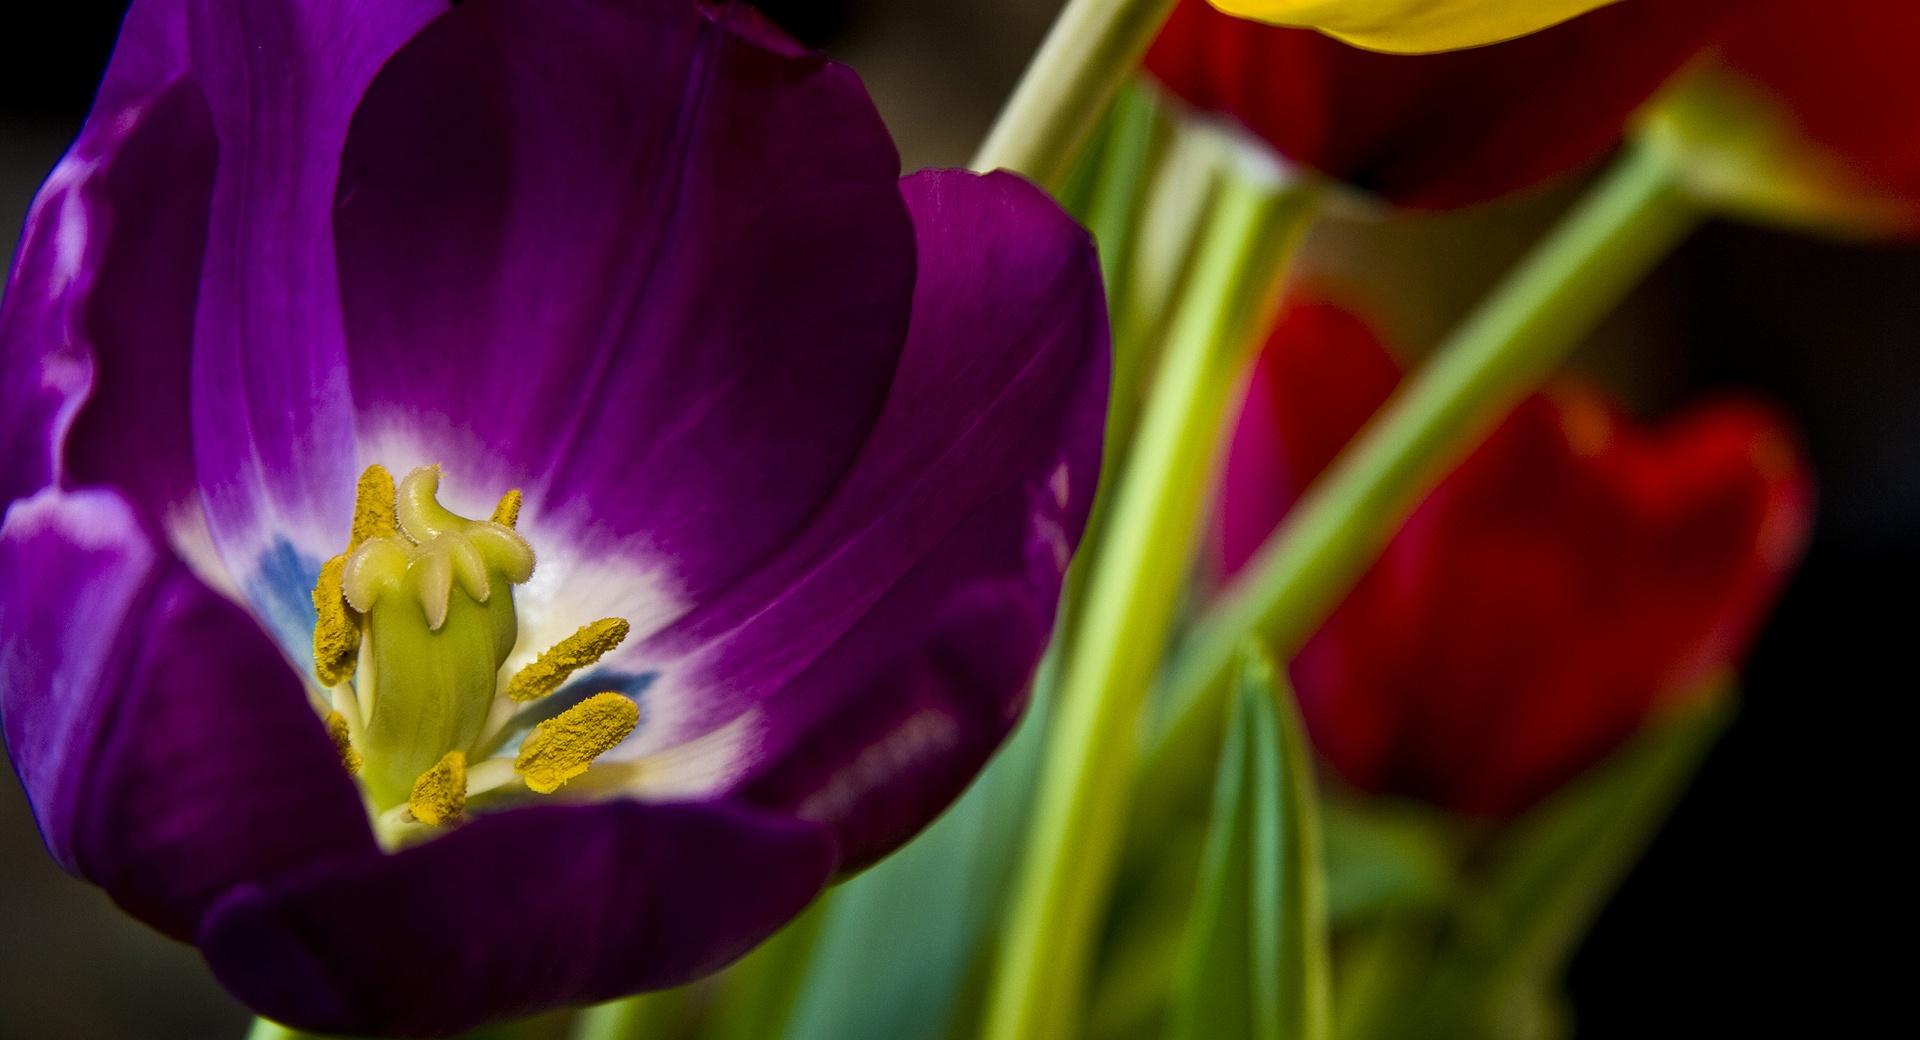 Purple Tulip at 1024 x 1024 iPad size wallpapers HD quality